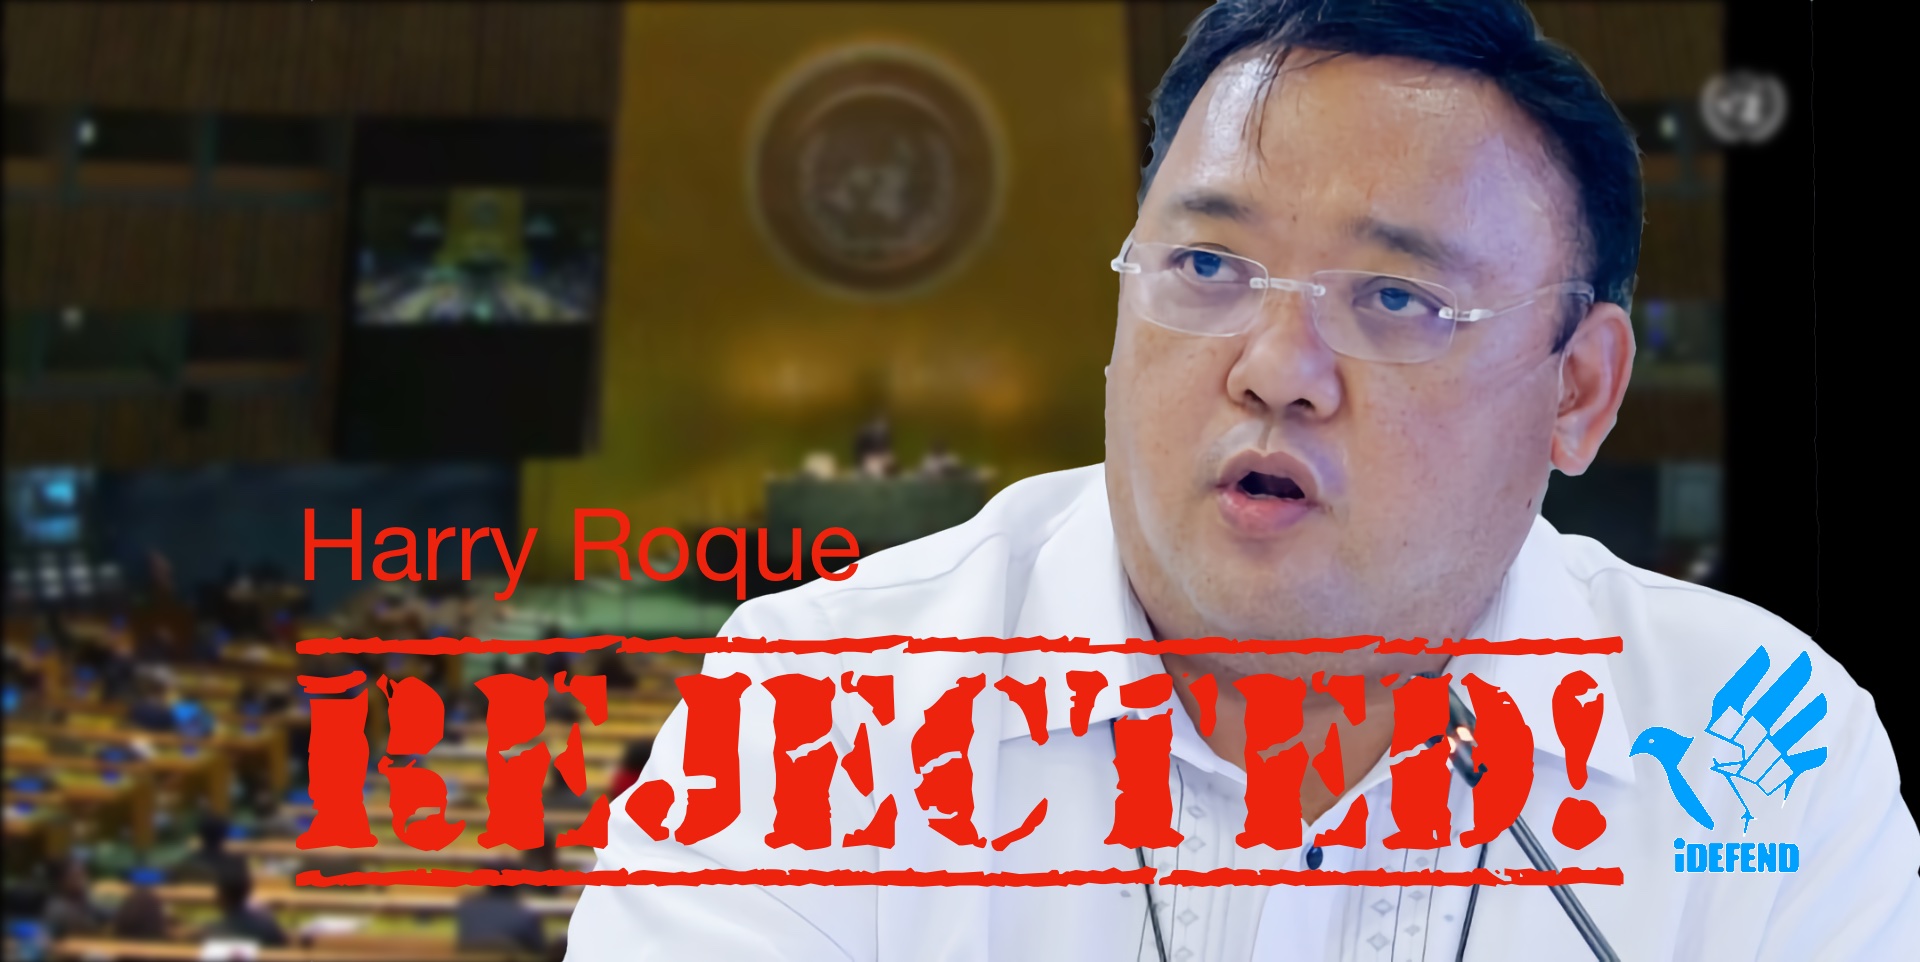 Harry Roque Rejected banner